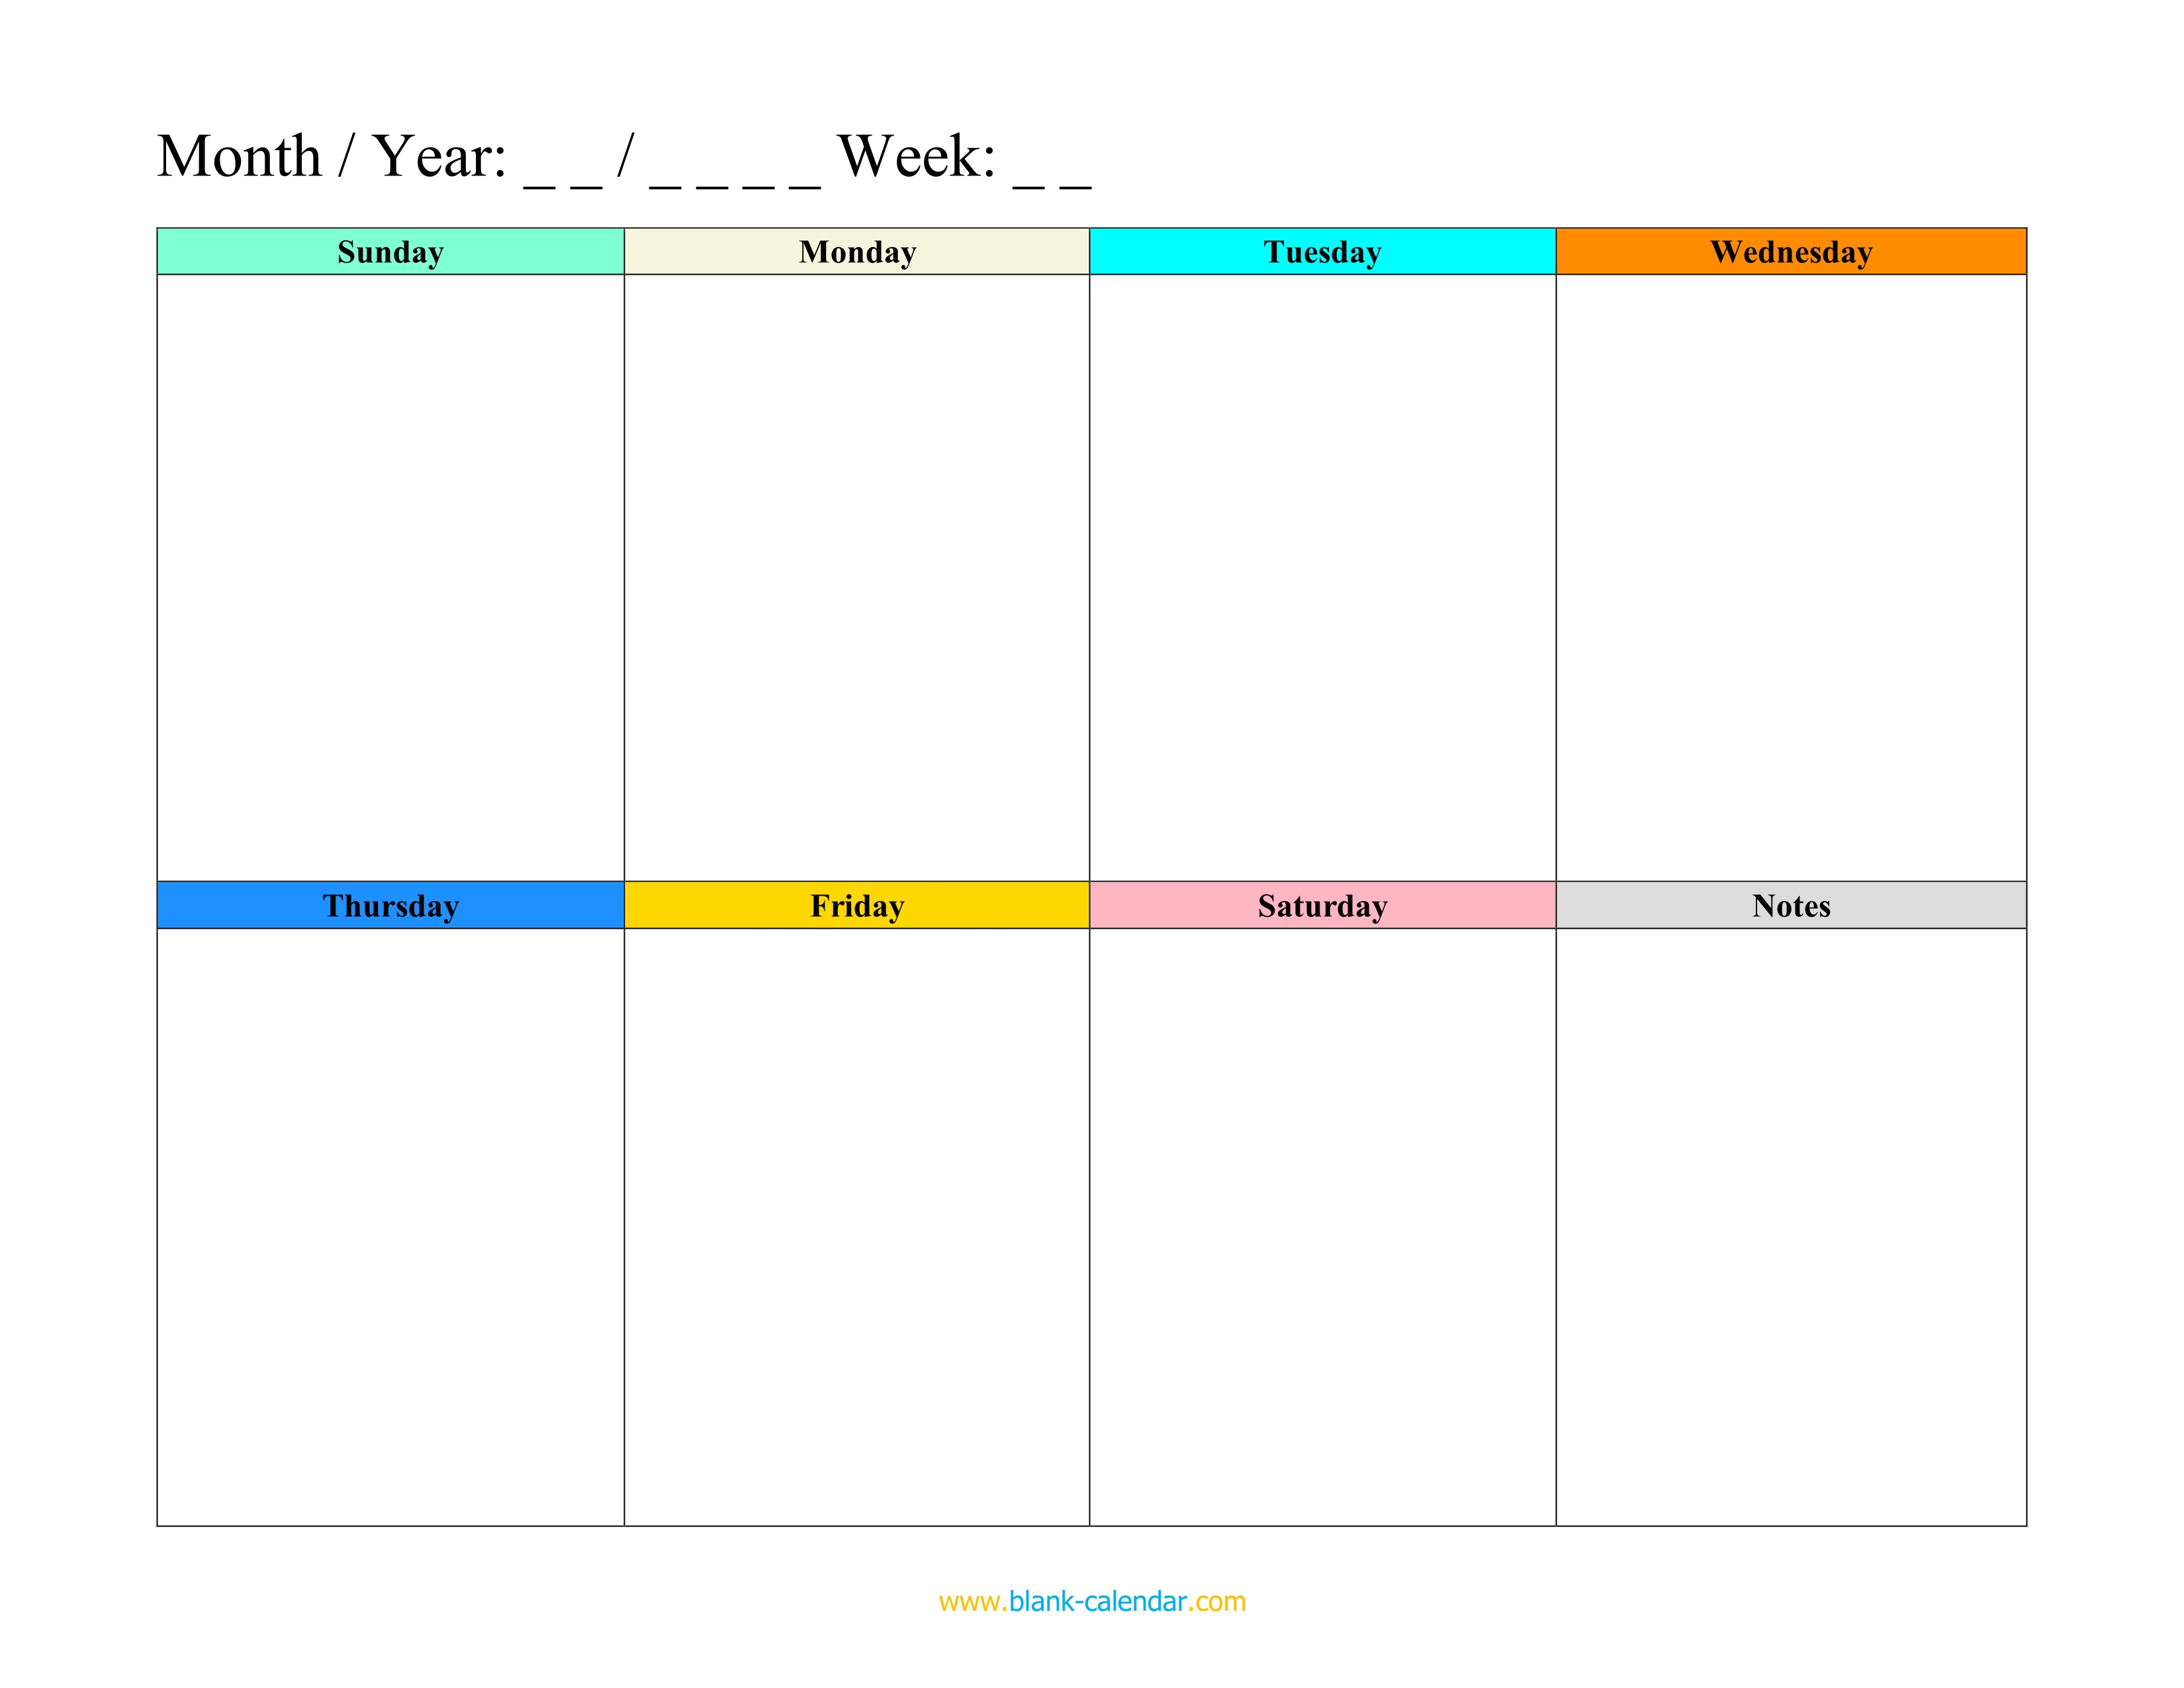 Schedule Planner Template from www.blank-calendar.com